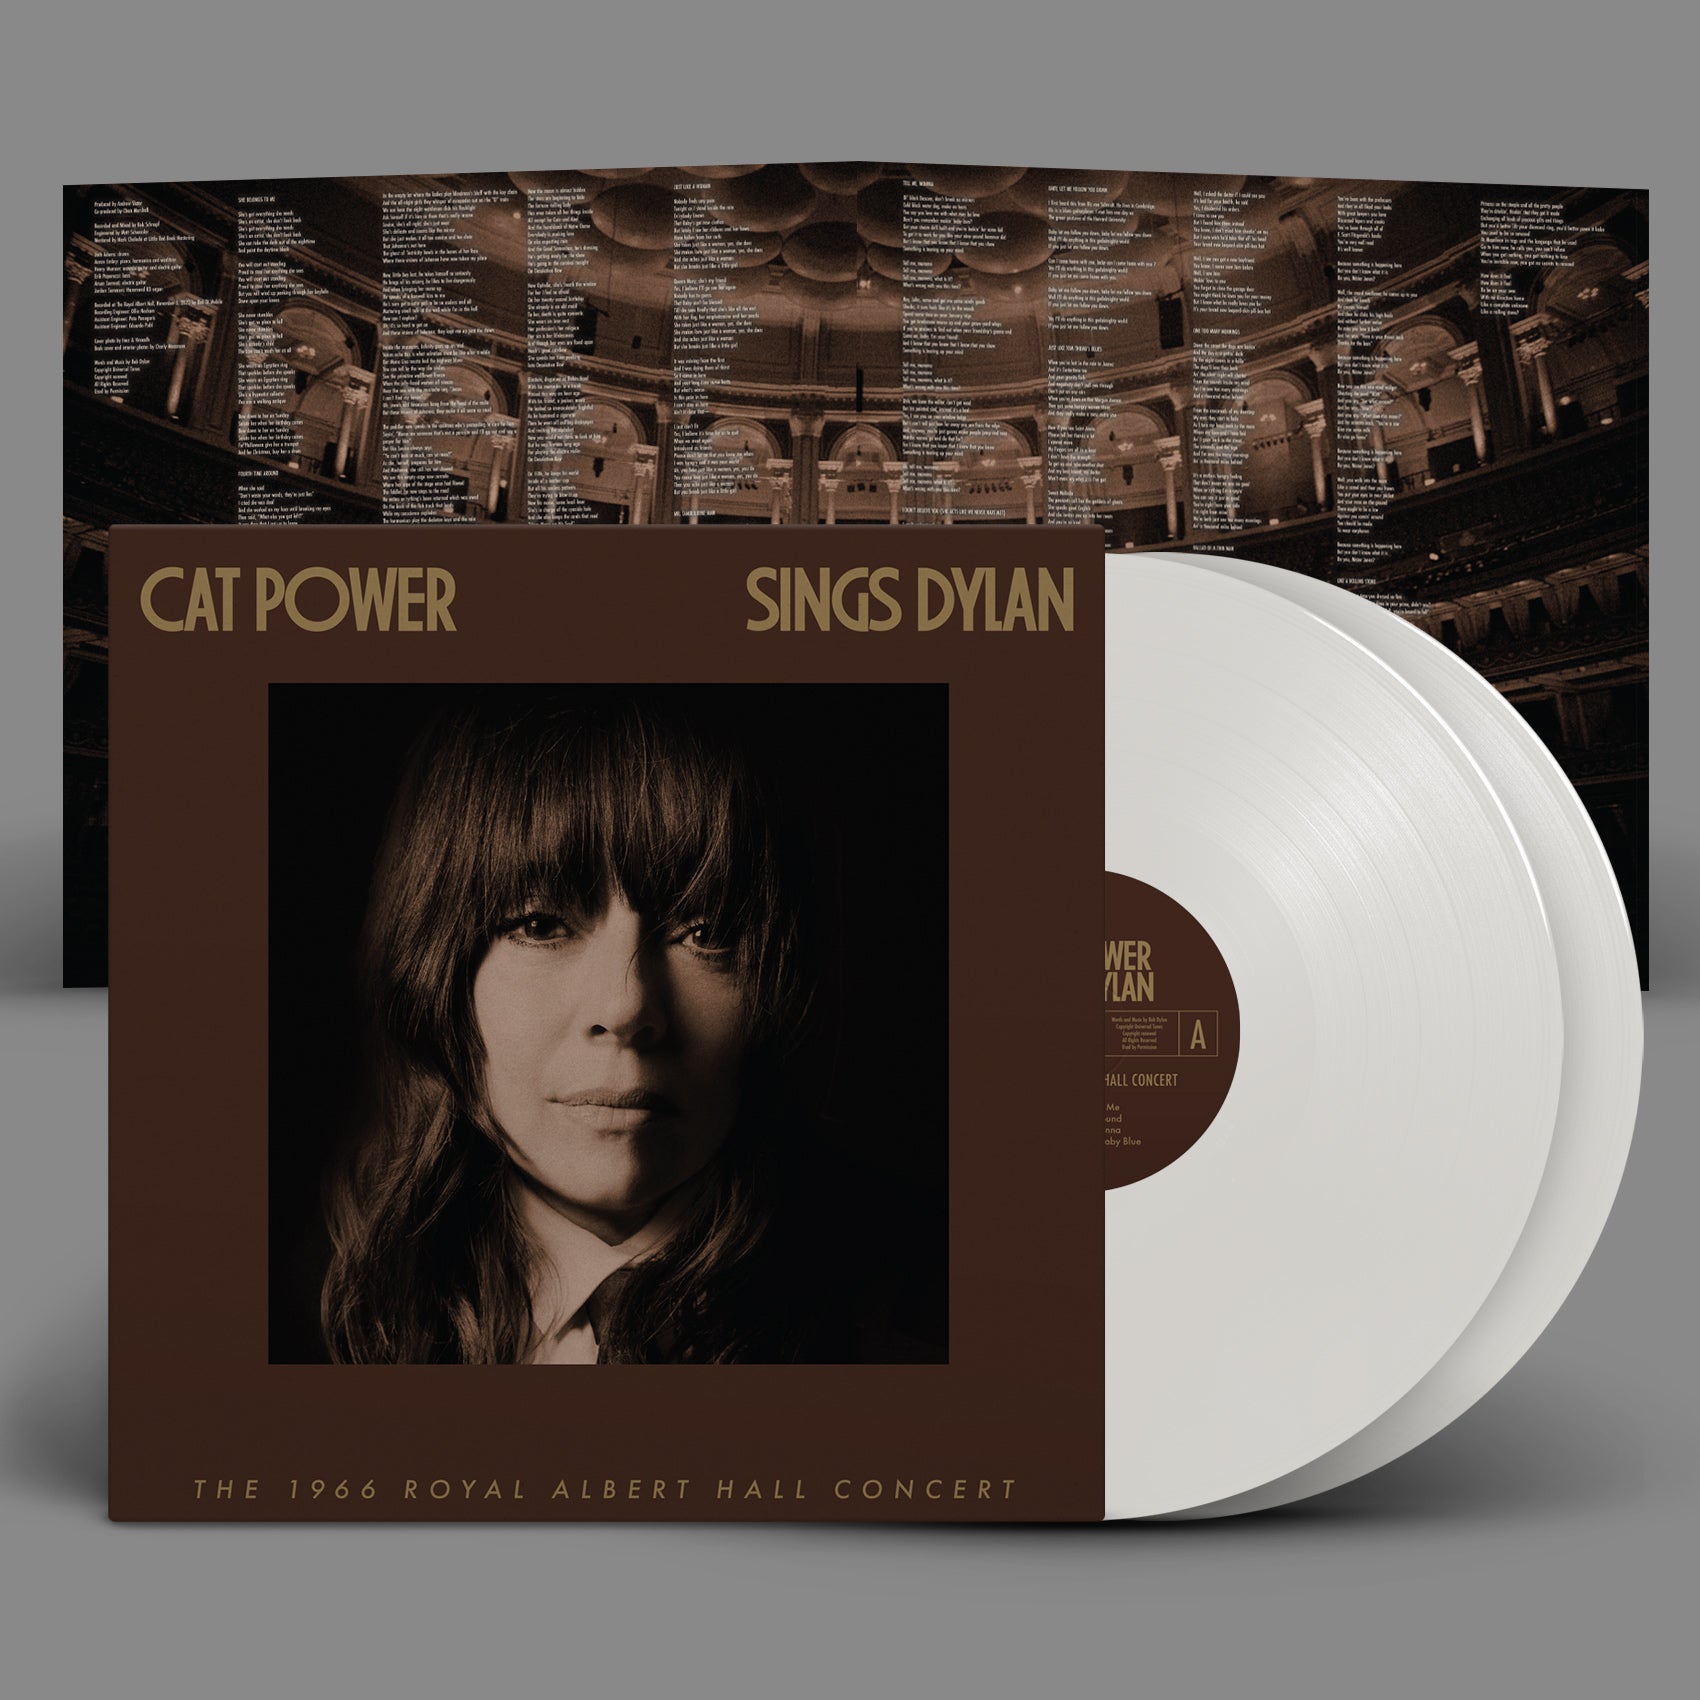 Cat Power - Cat Power Sings Dylan - The 1966 Royal Albert Hall Concert: Limited White Vinyl 2LP